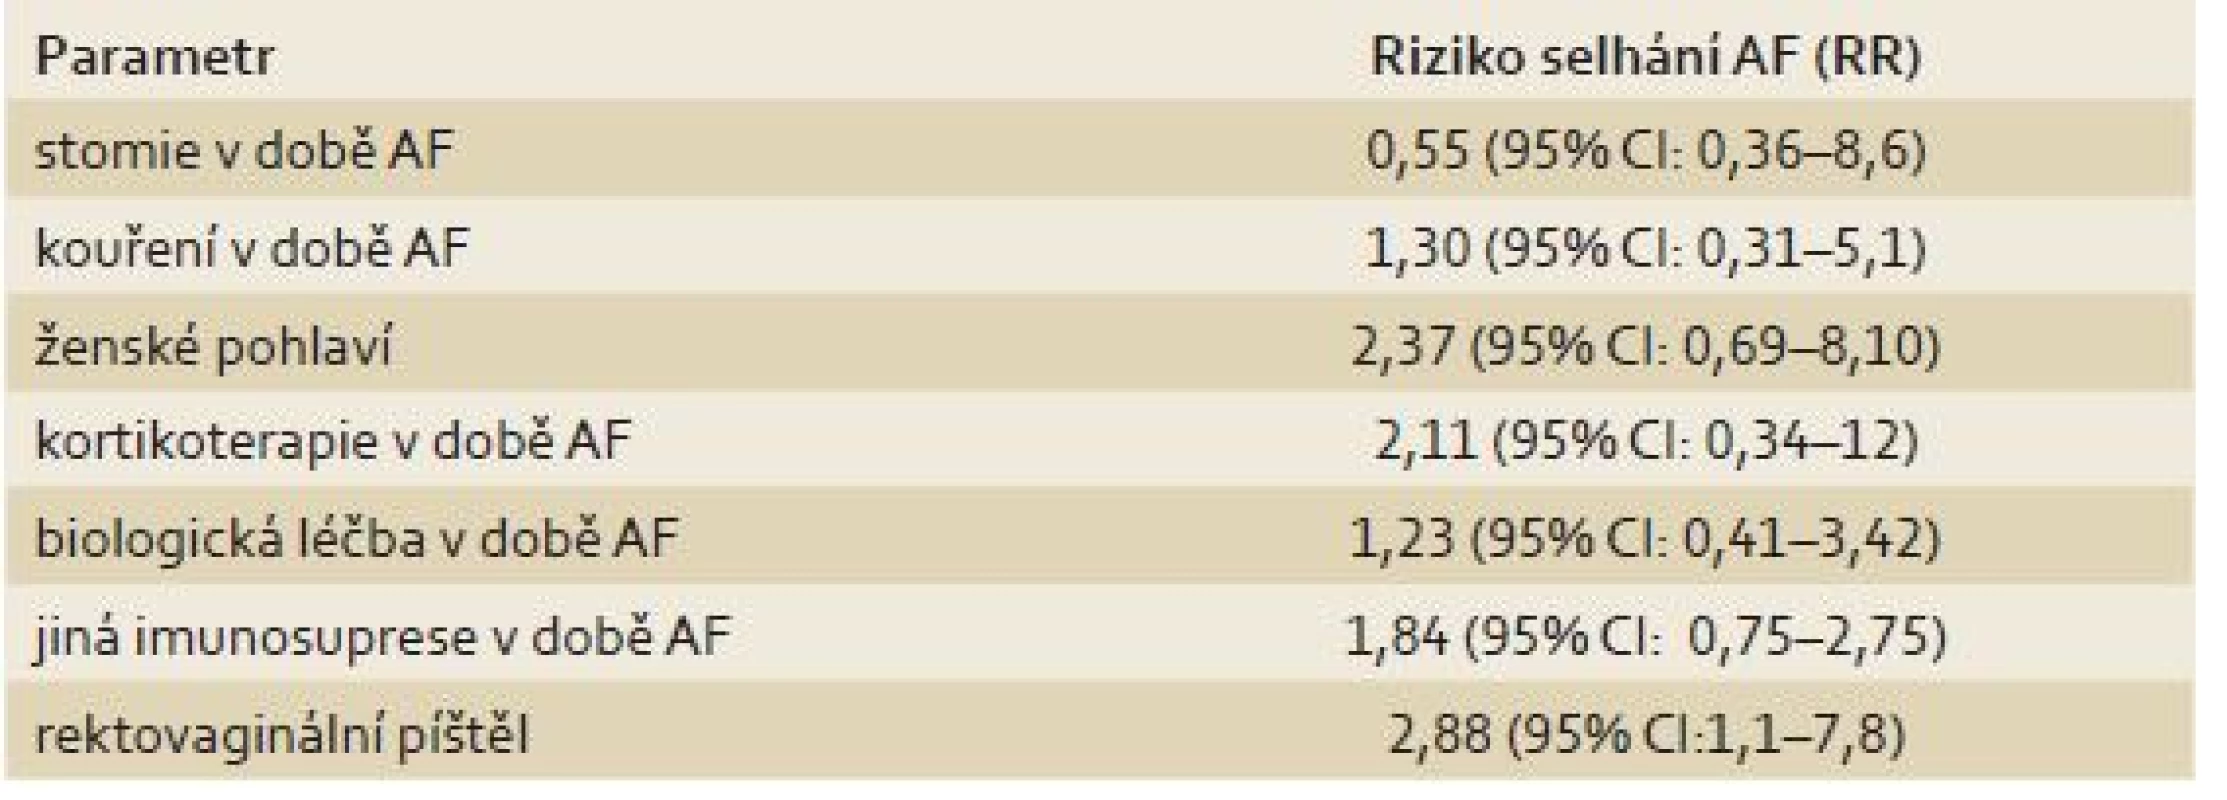 Jednotlivé sledované rizikové faktory a jejich vliv na selhání hojení AF (risk ratio – RR).
Tab. 1. Summary of evaluated risk factors and their influence on the AF failure (risk ratio – RR).